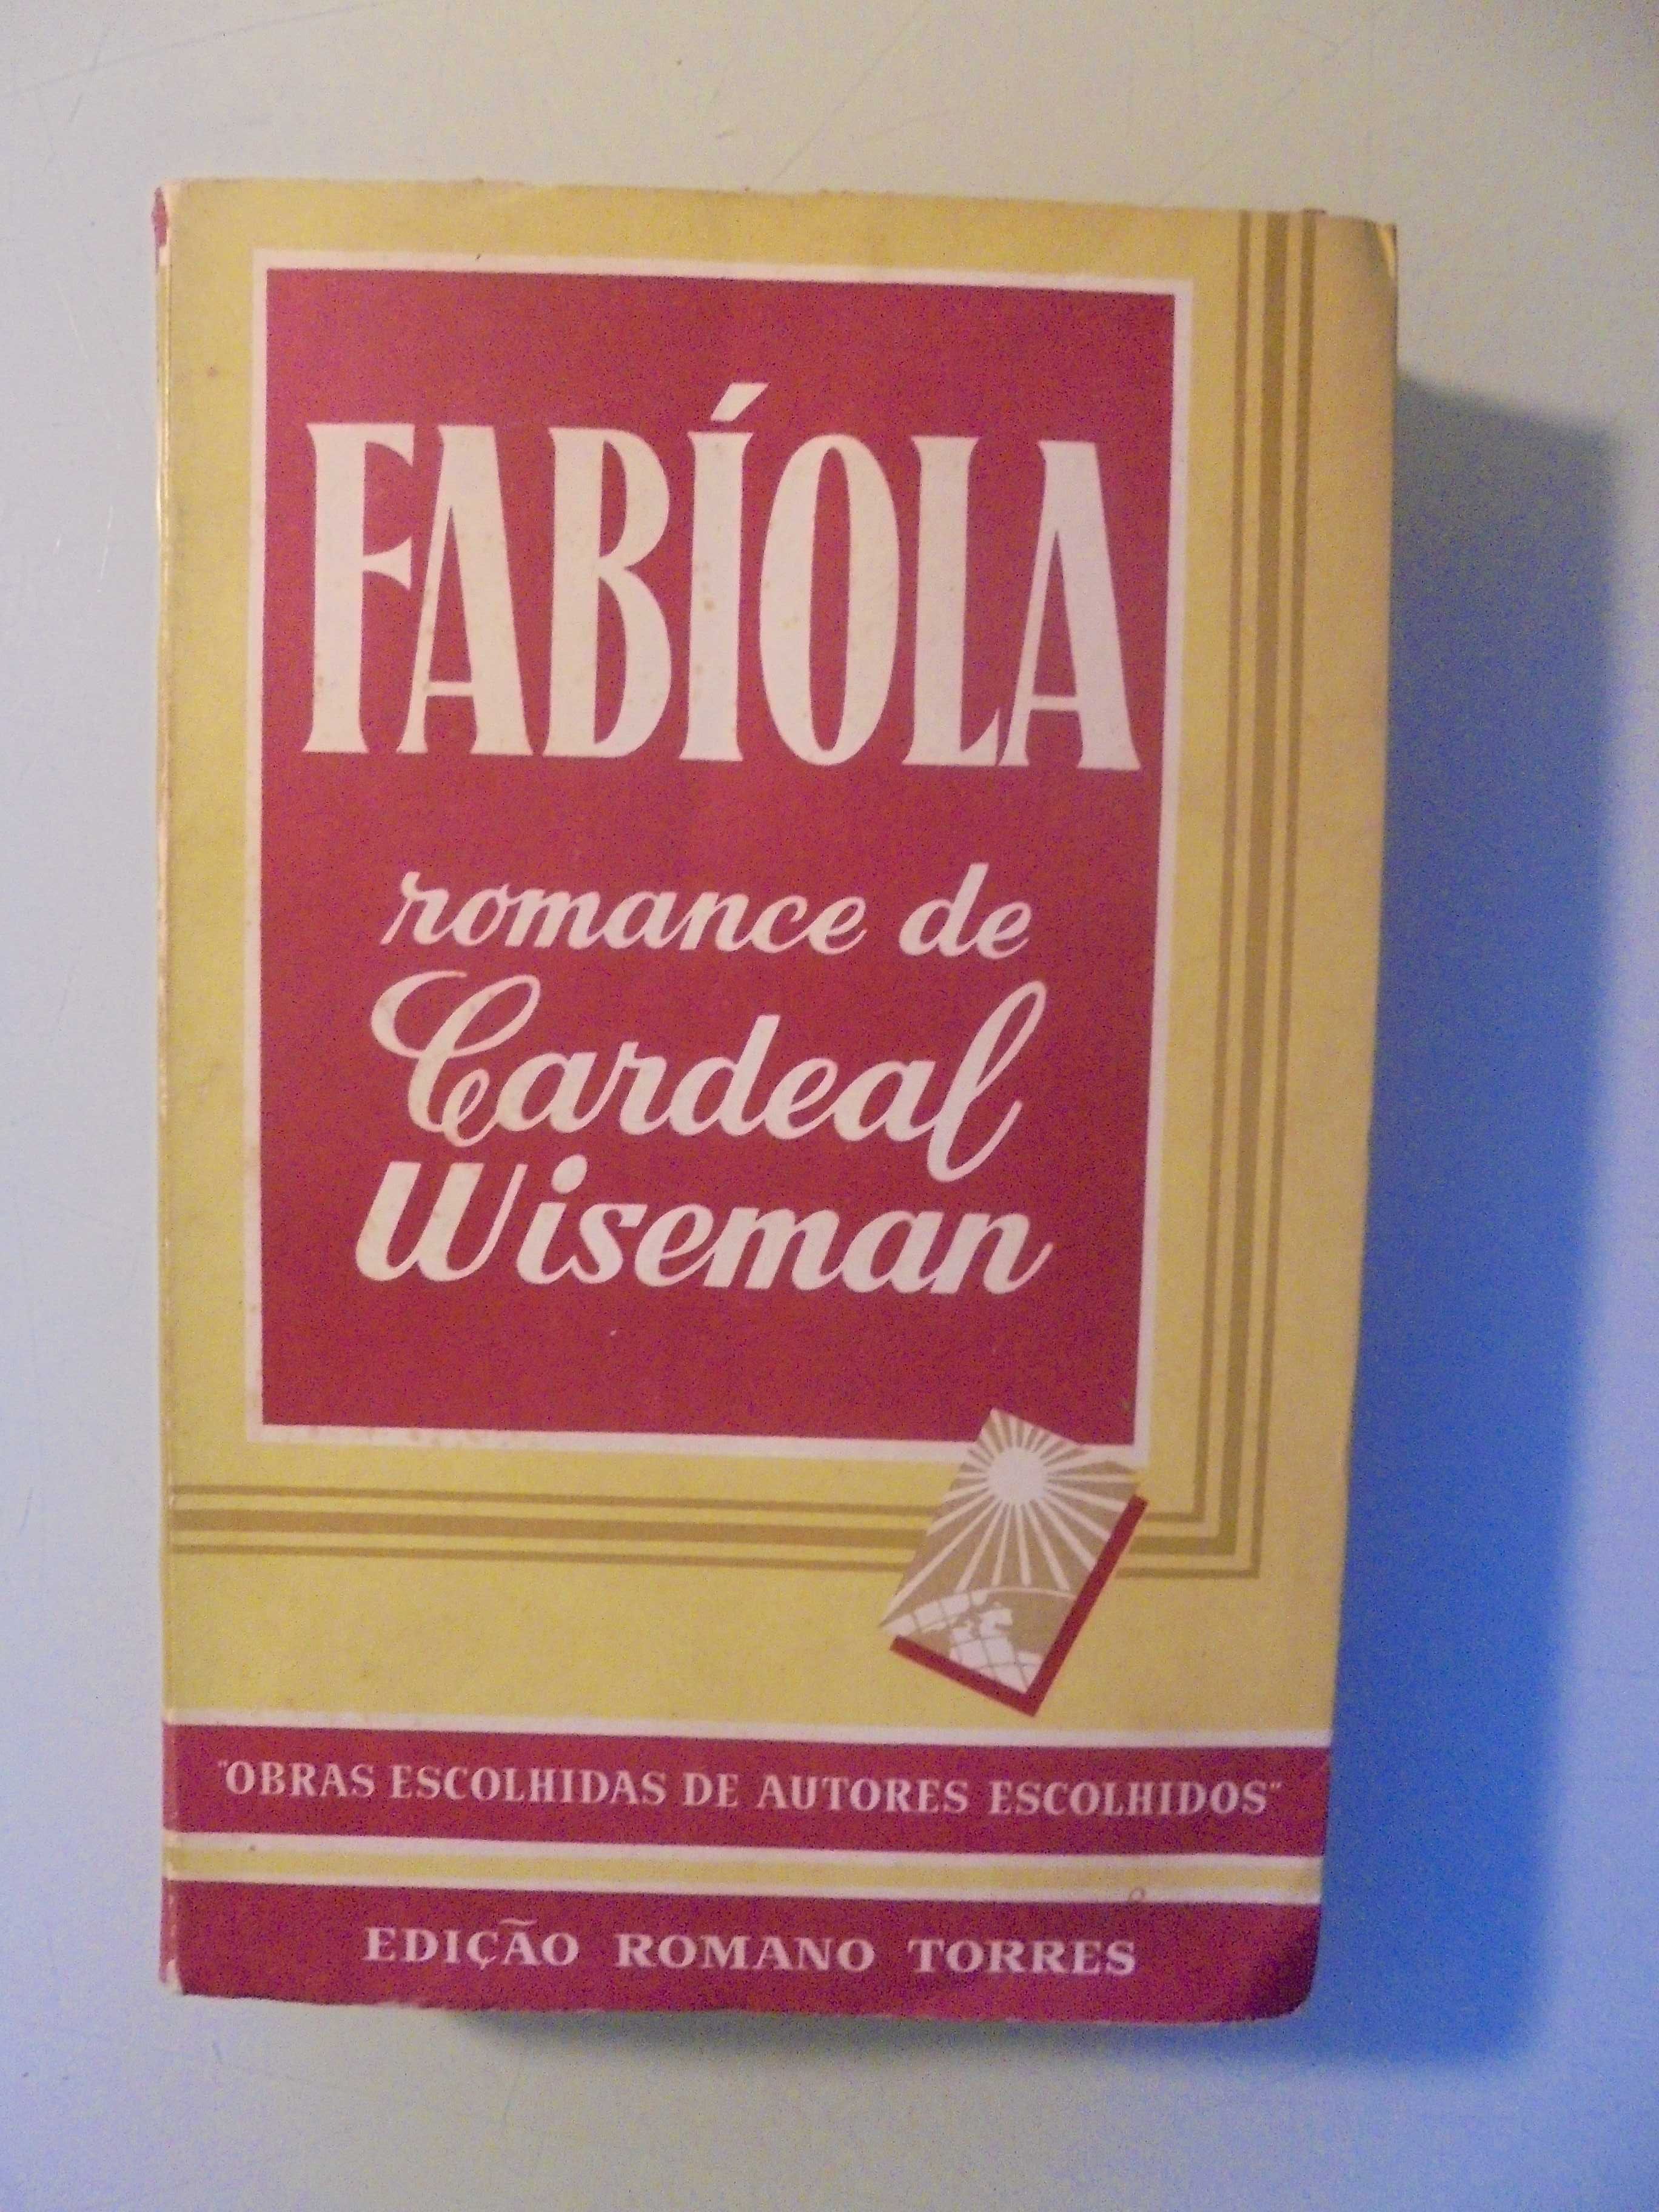 Wiseman (Cardeal);Fabíoloa